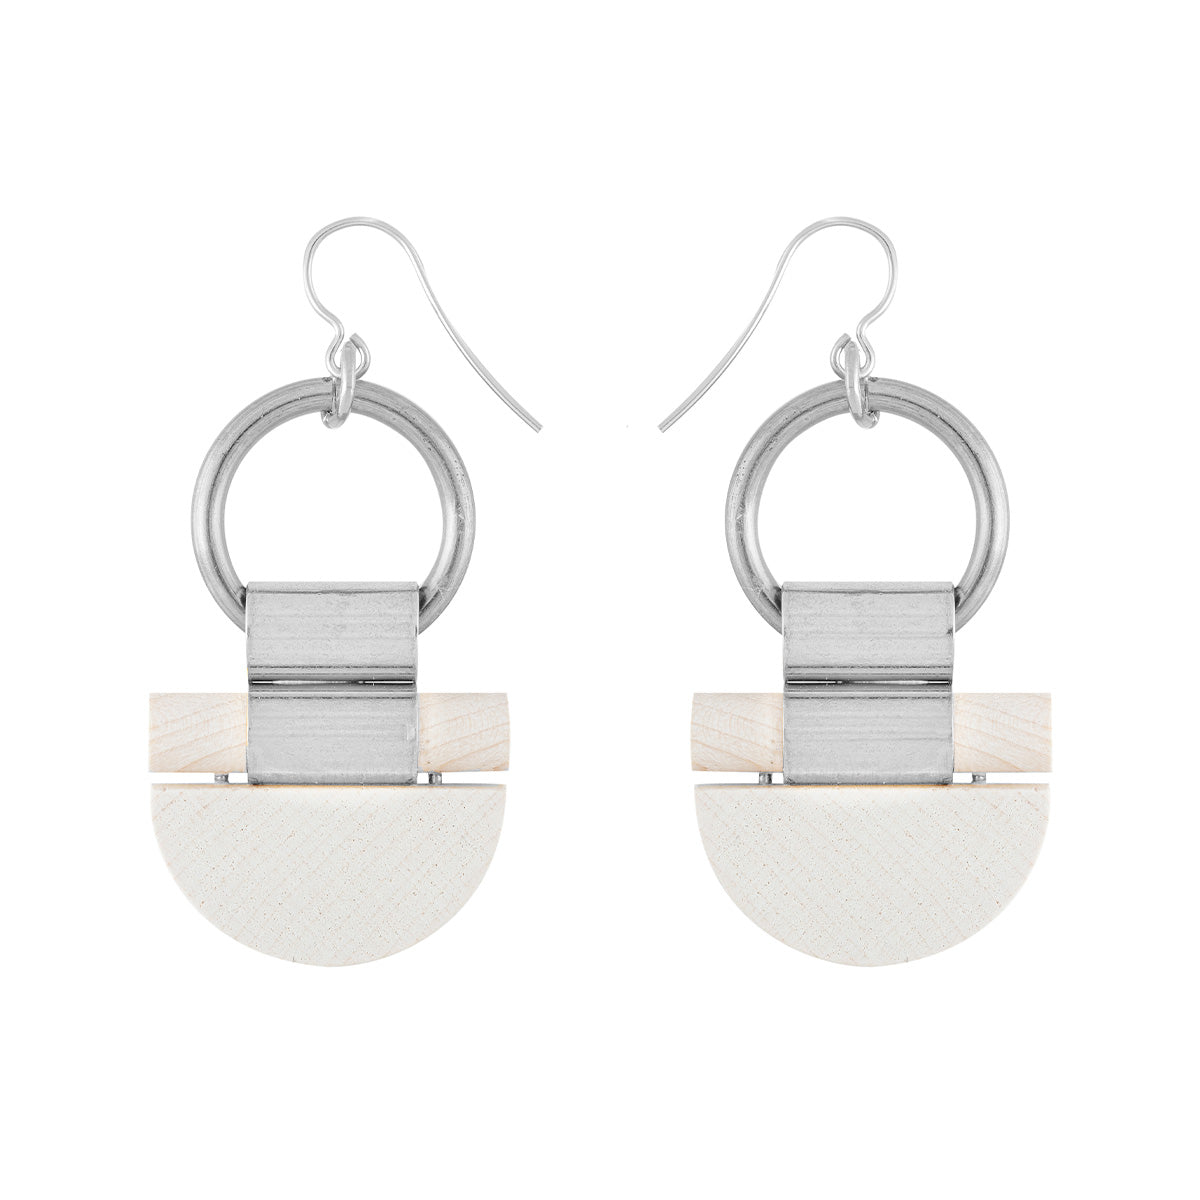 Kelohonka earrings, white